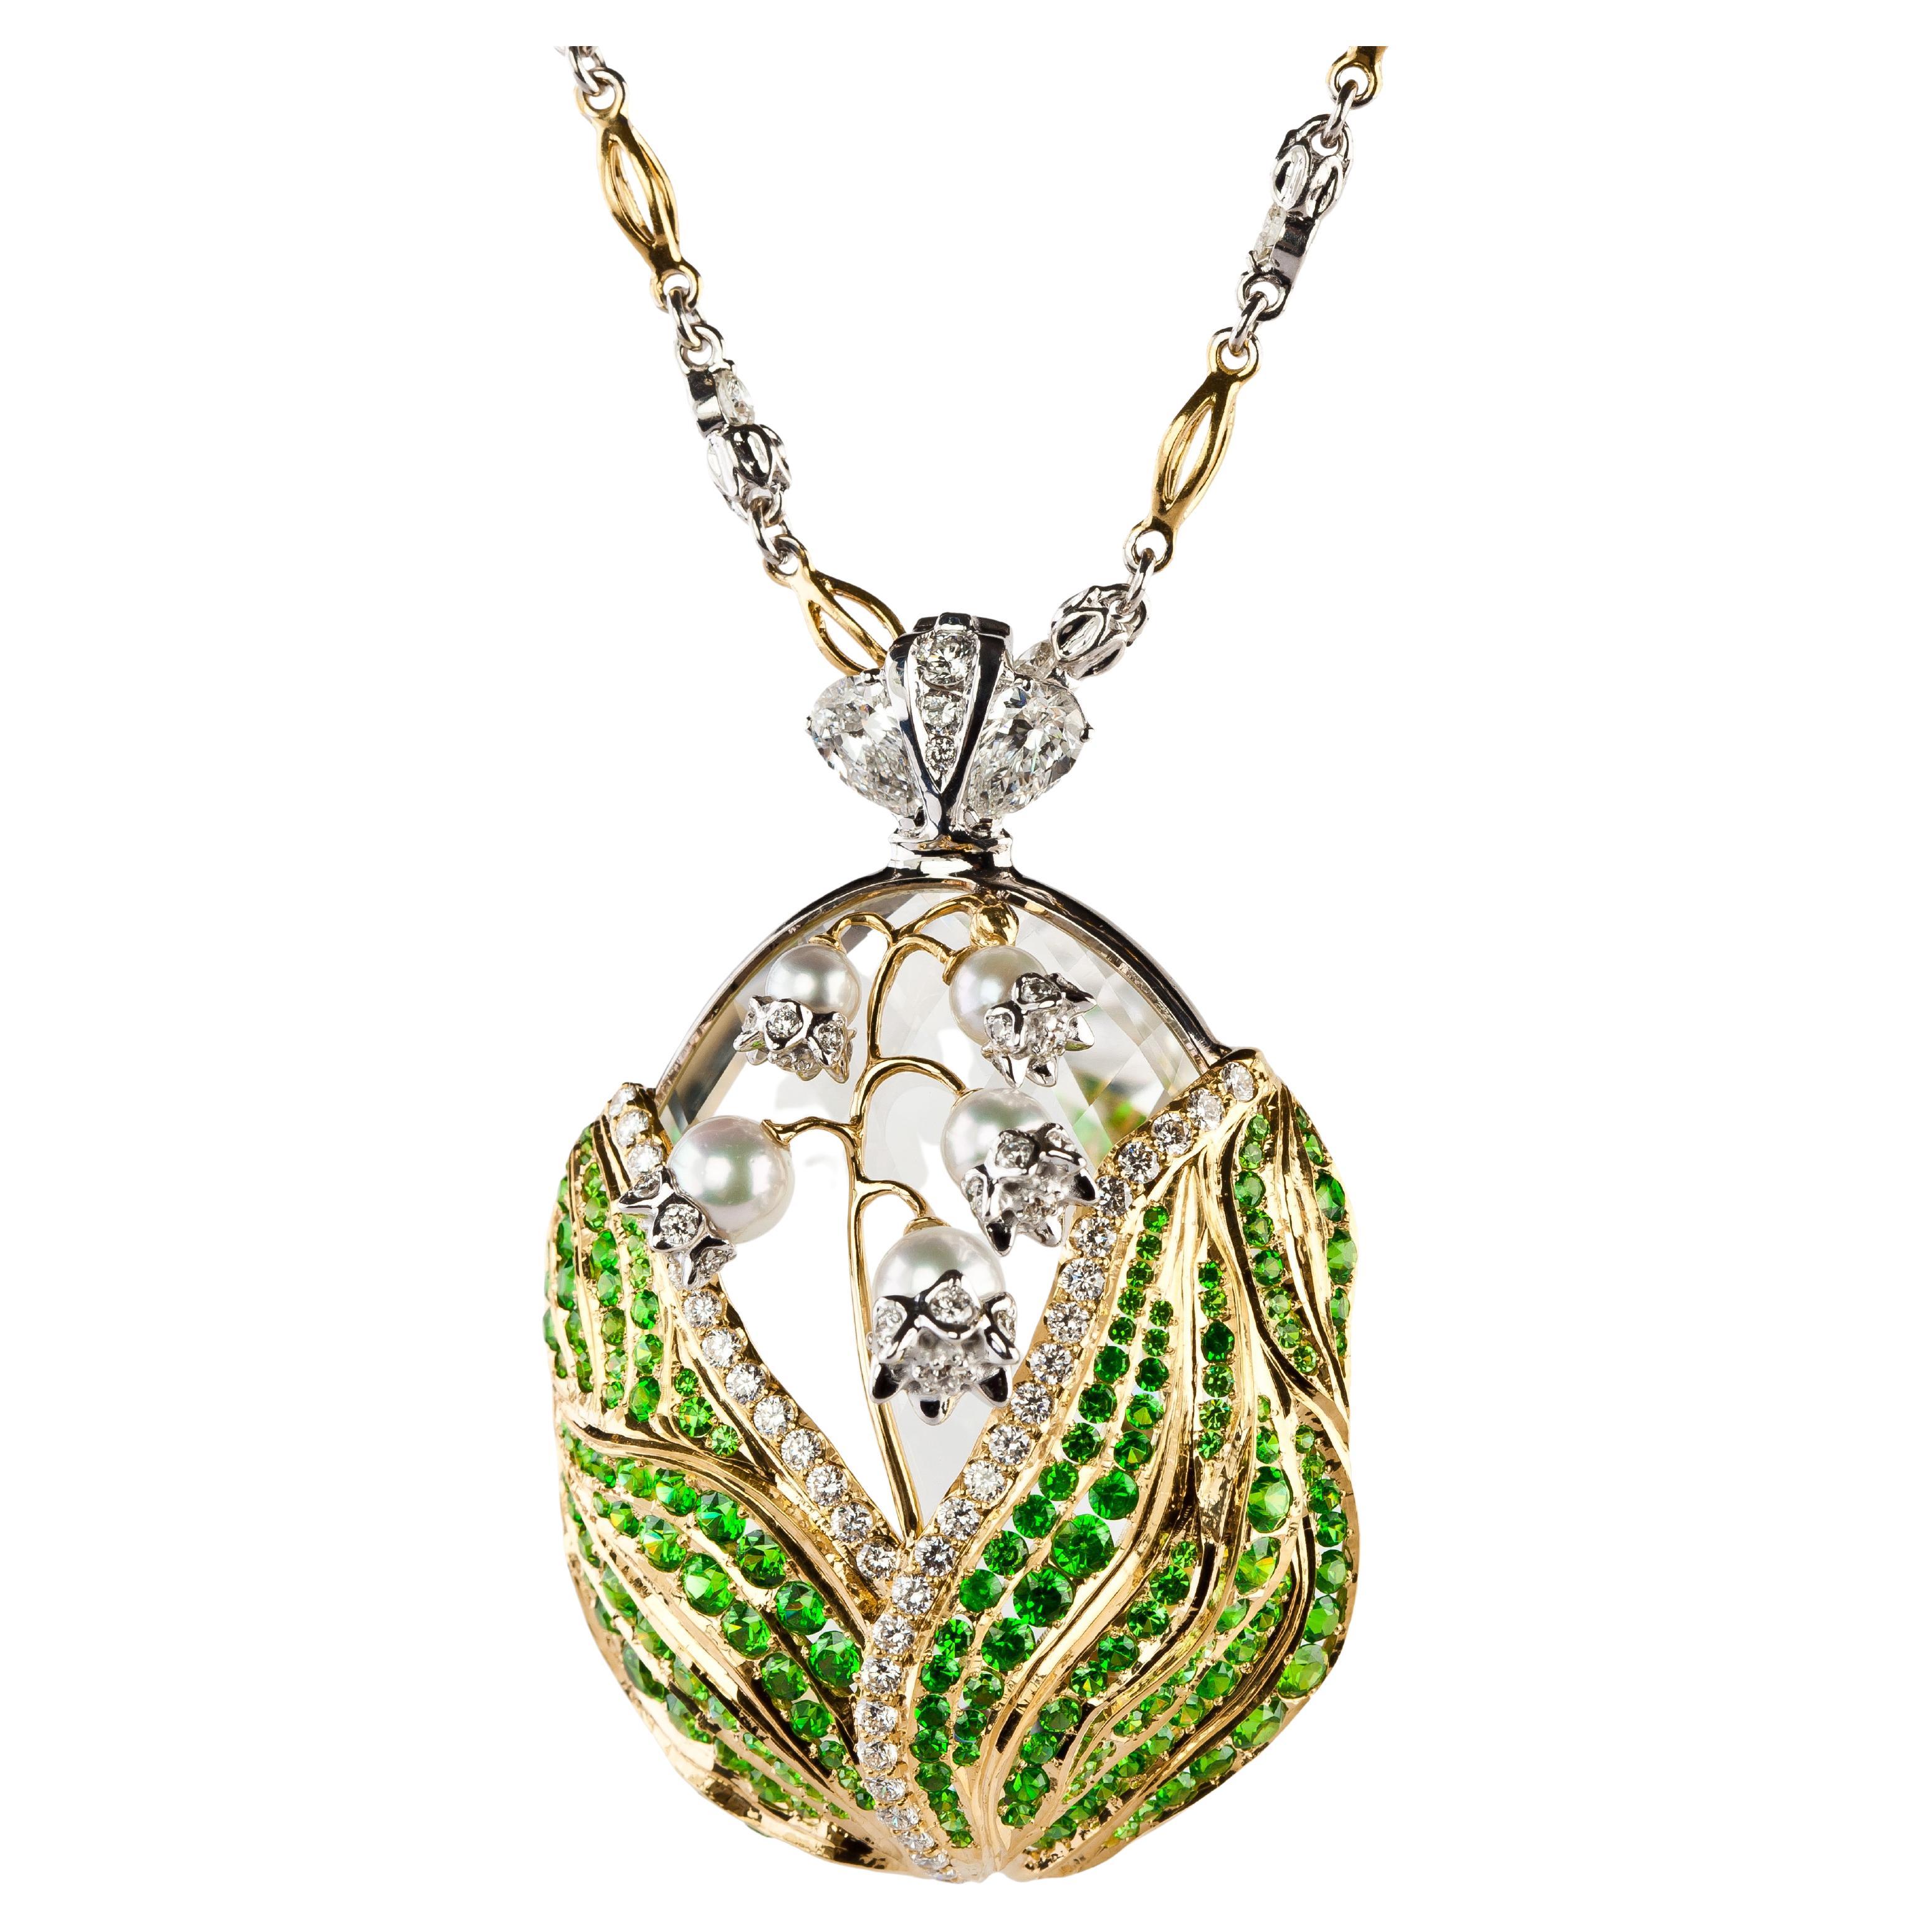 VIKTOR MOISEIKIN Collier pendentif Lily of the Valley en or 18 carats fait à la main